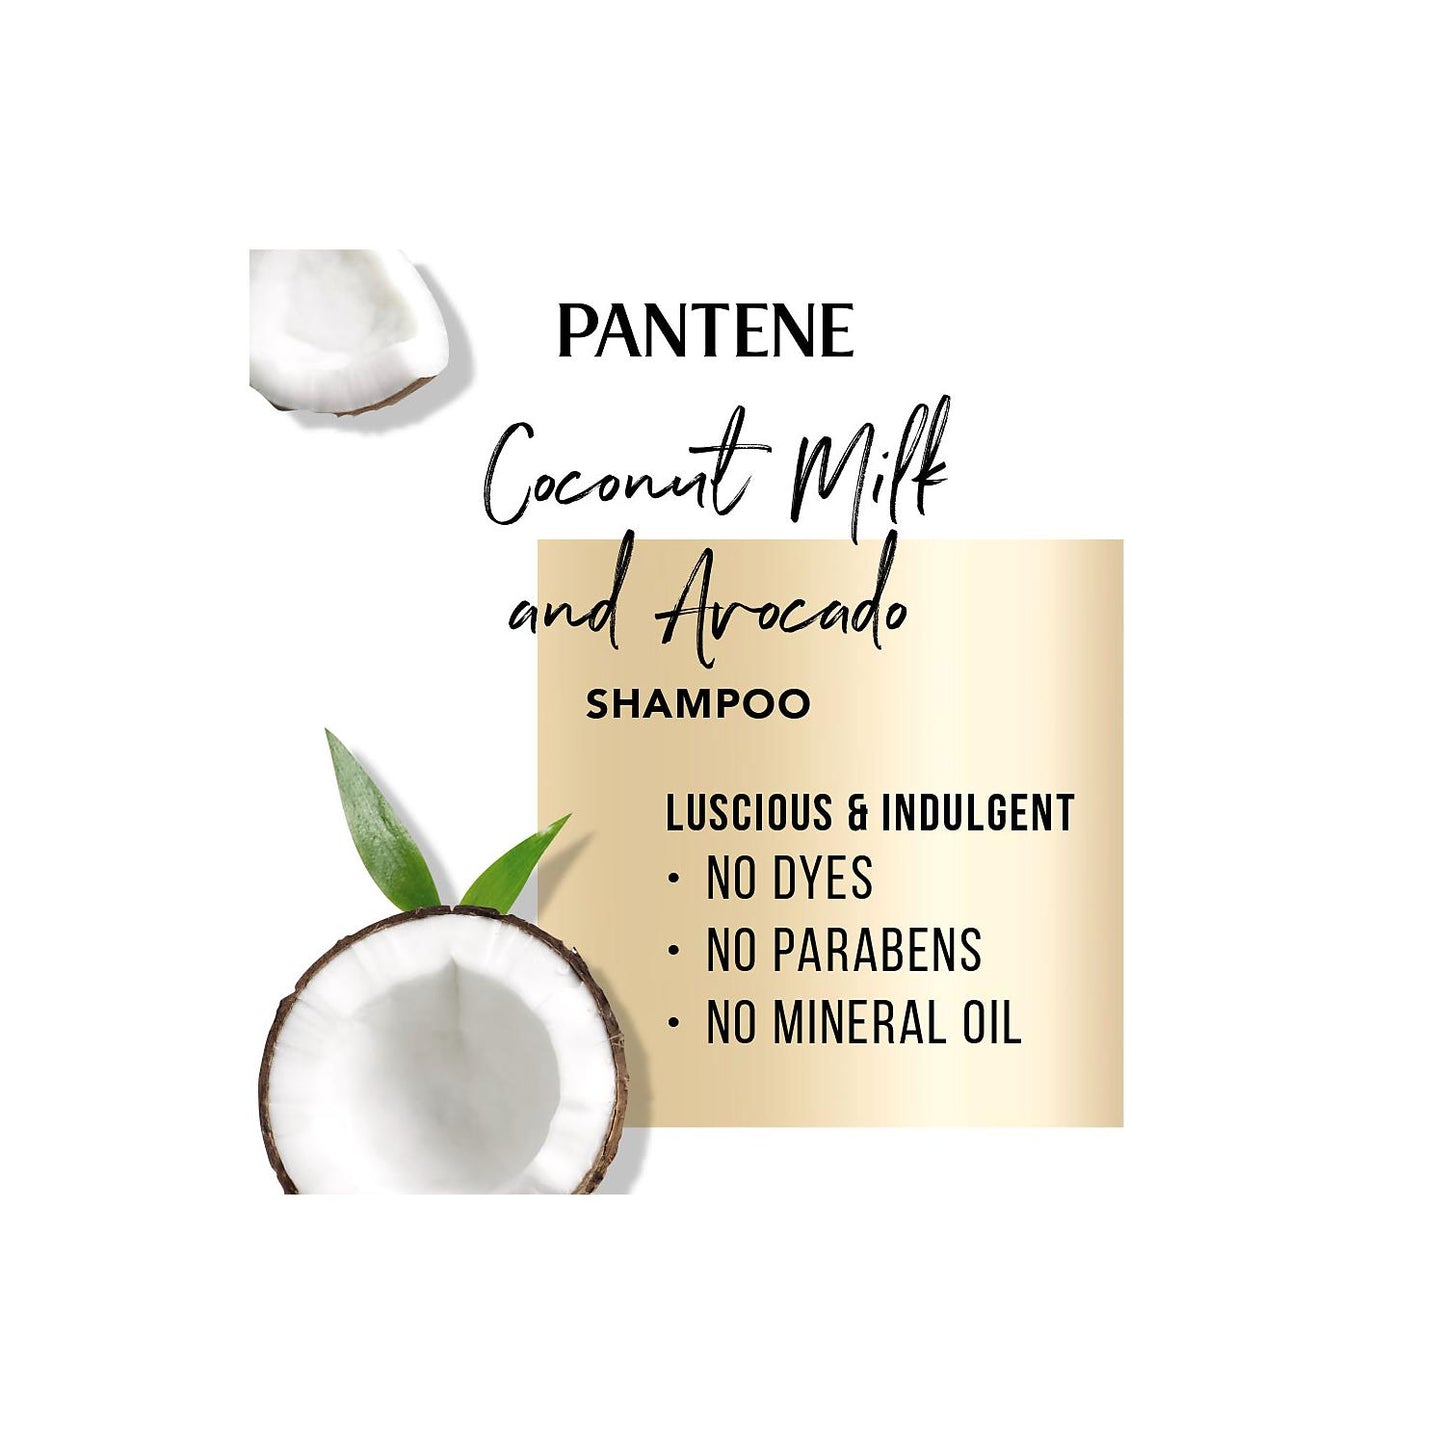 Pantene Pro-V Paraben Free, Dye Free, Mineral Oil Free Coconut Milk and Avocado Moisturizing Shampoo for Dry Hair (38.2 fl., oz.)